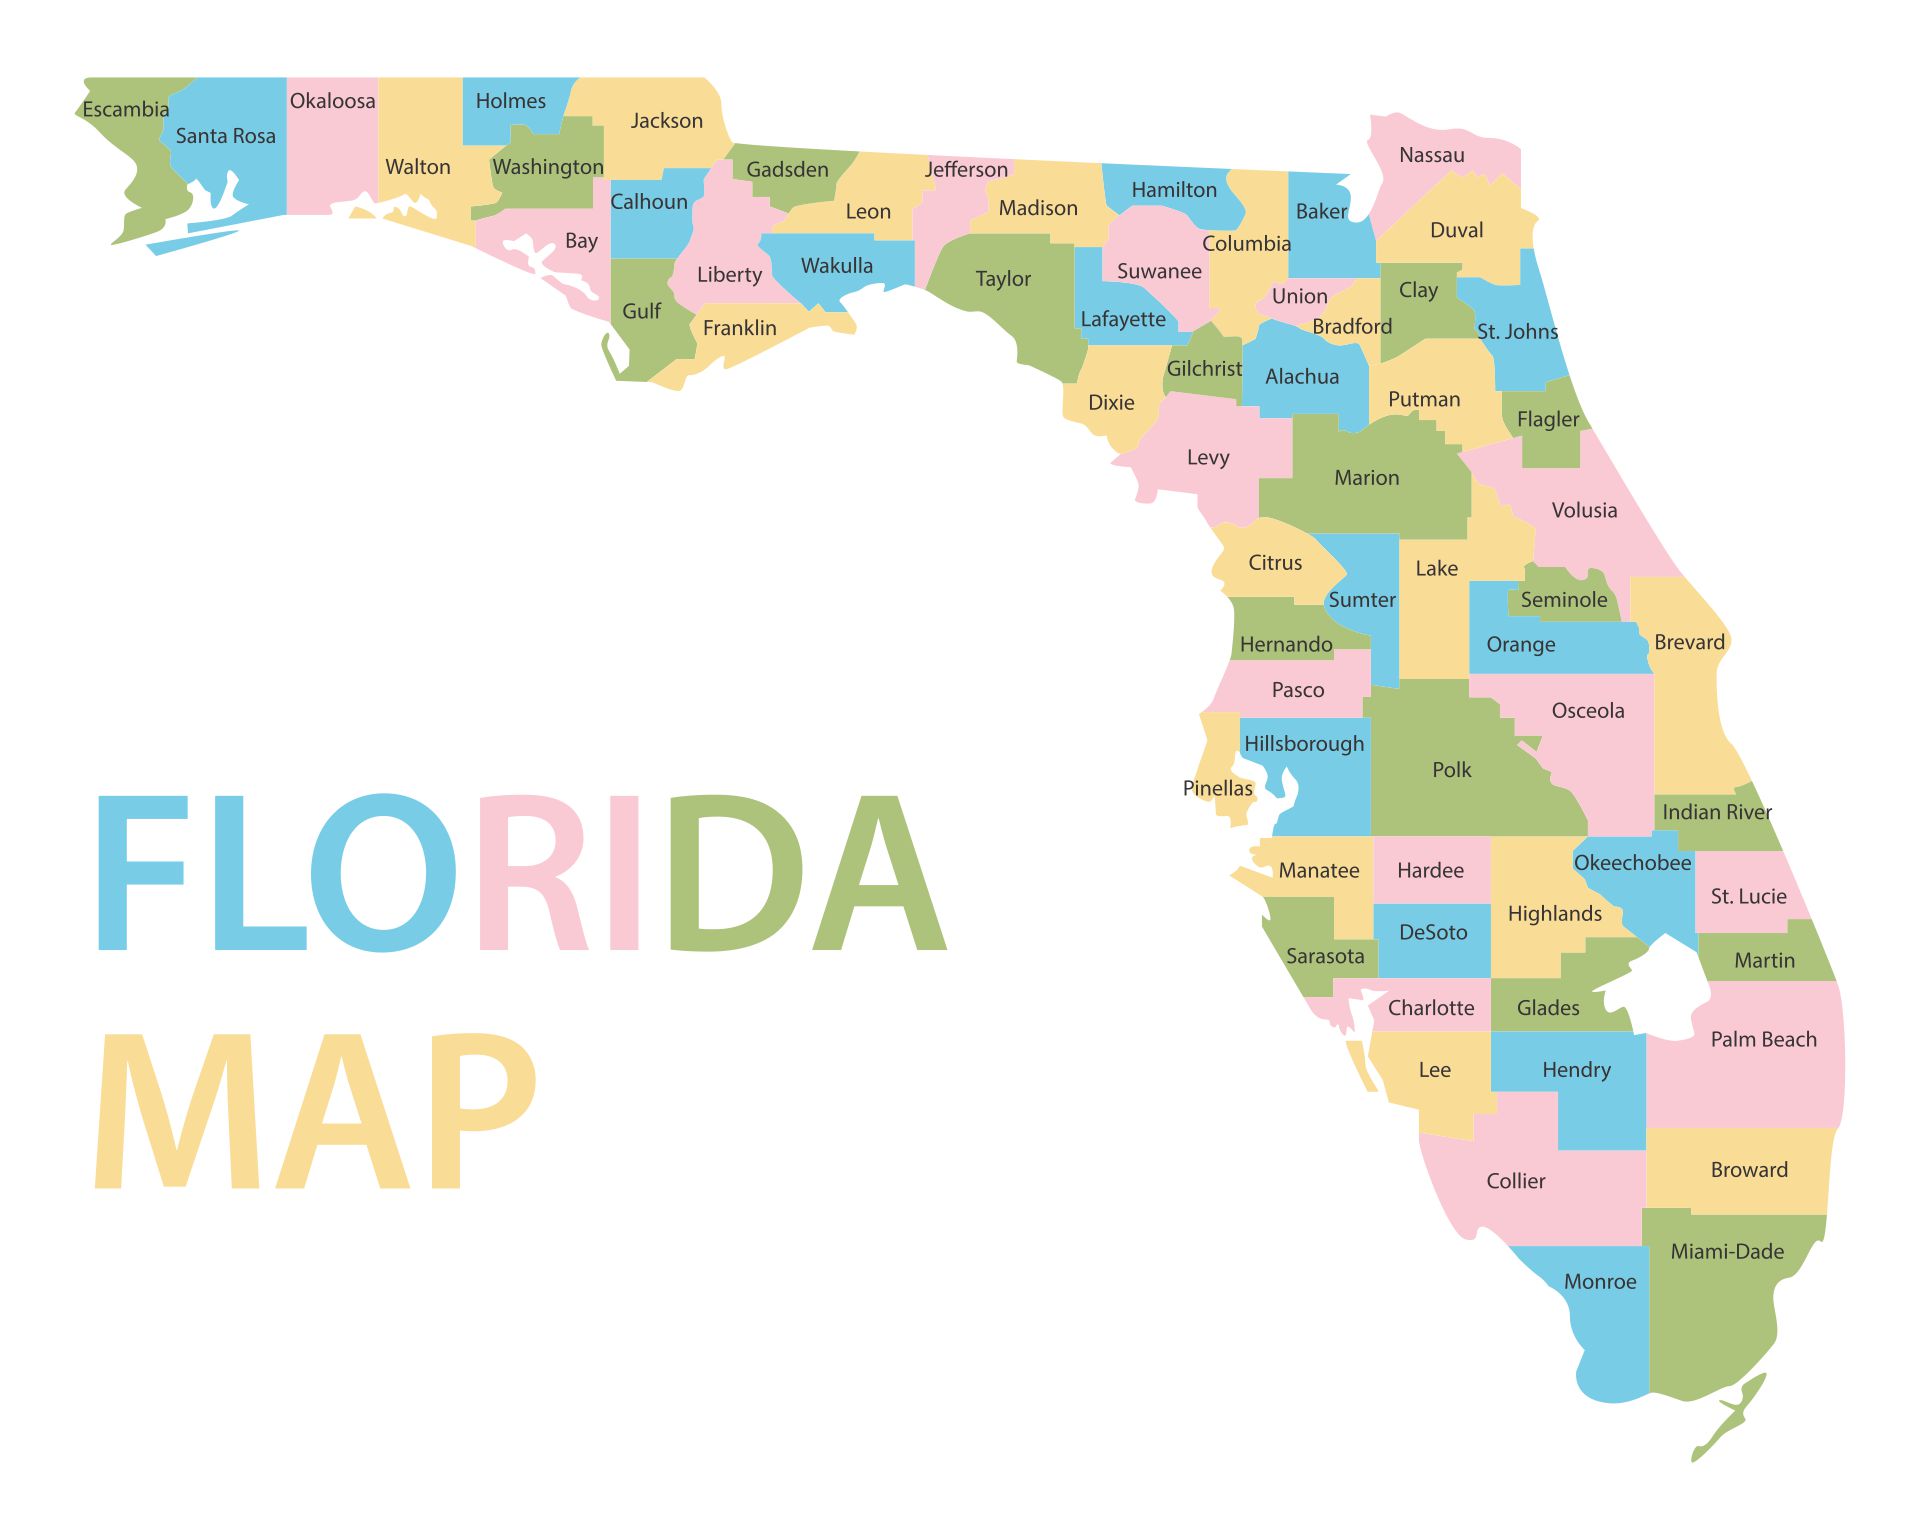 Florida Map with Capital